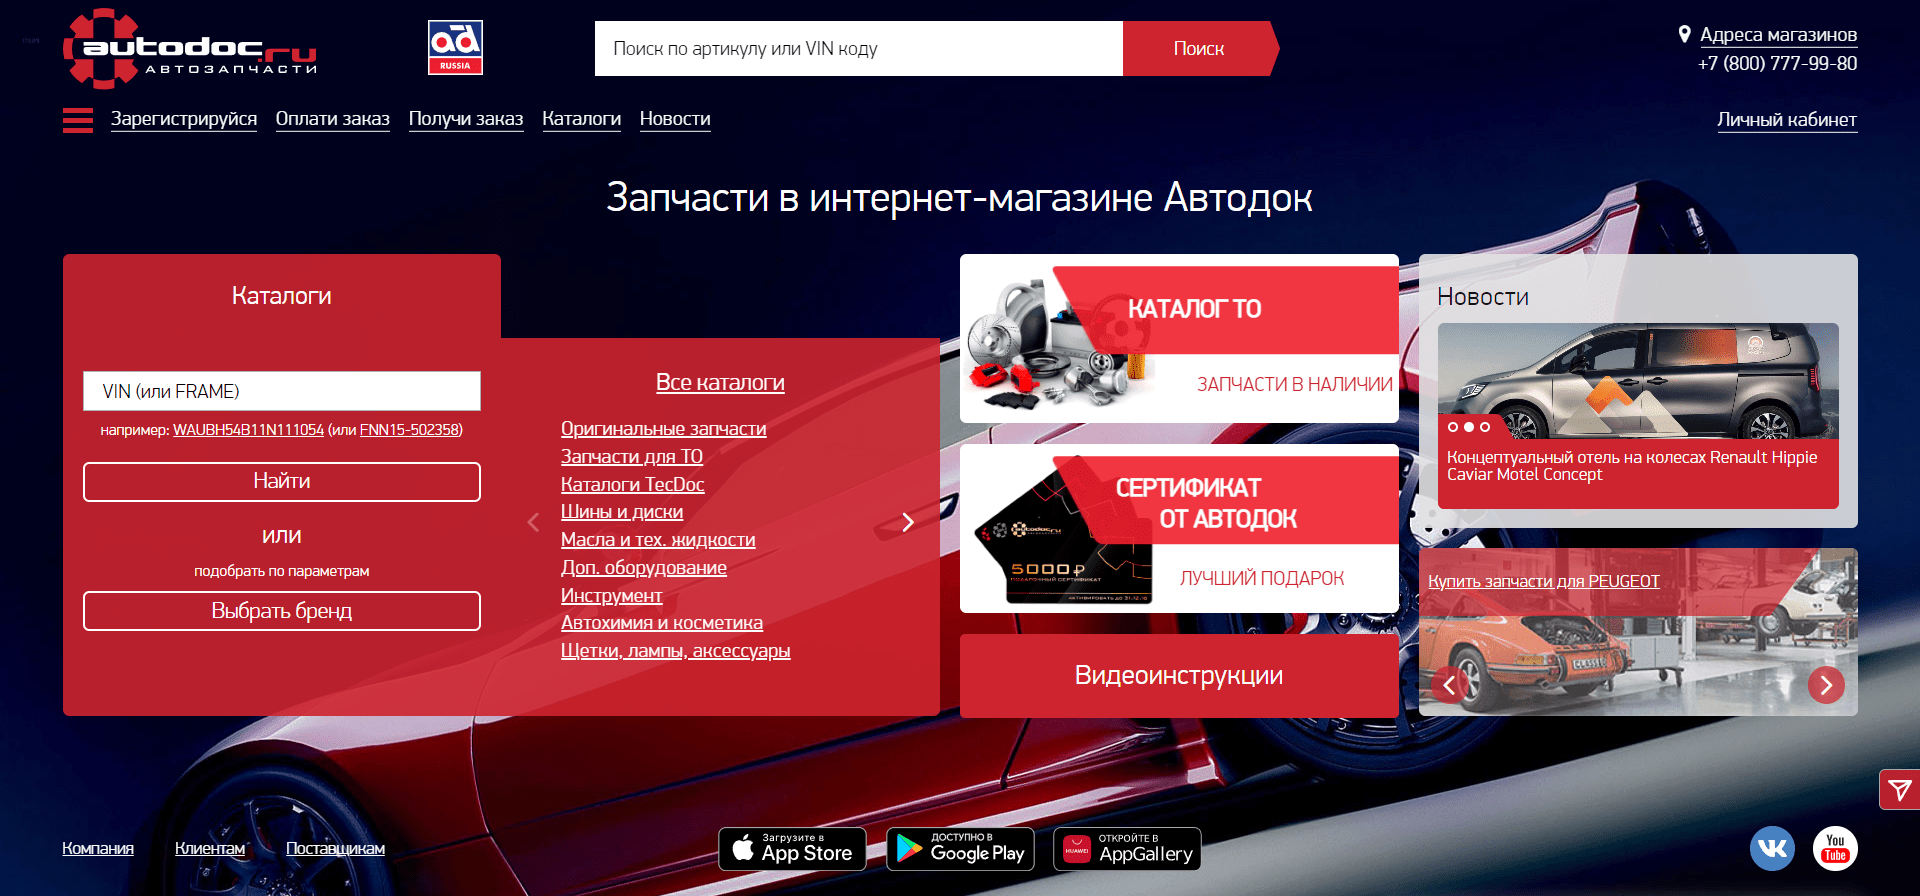 АвтоДок — интернет-магазин